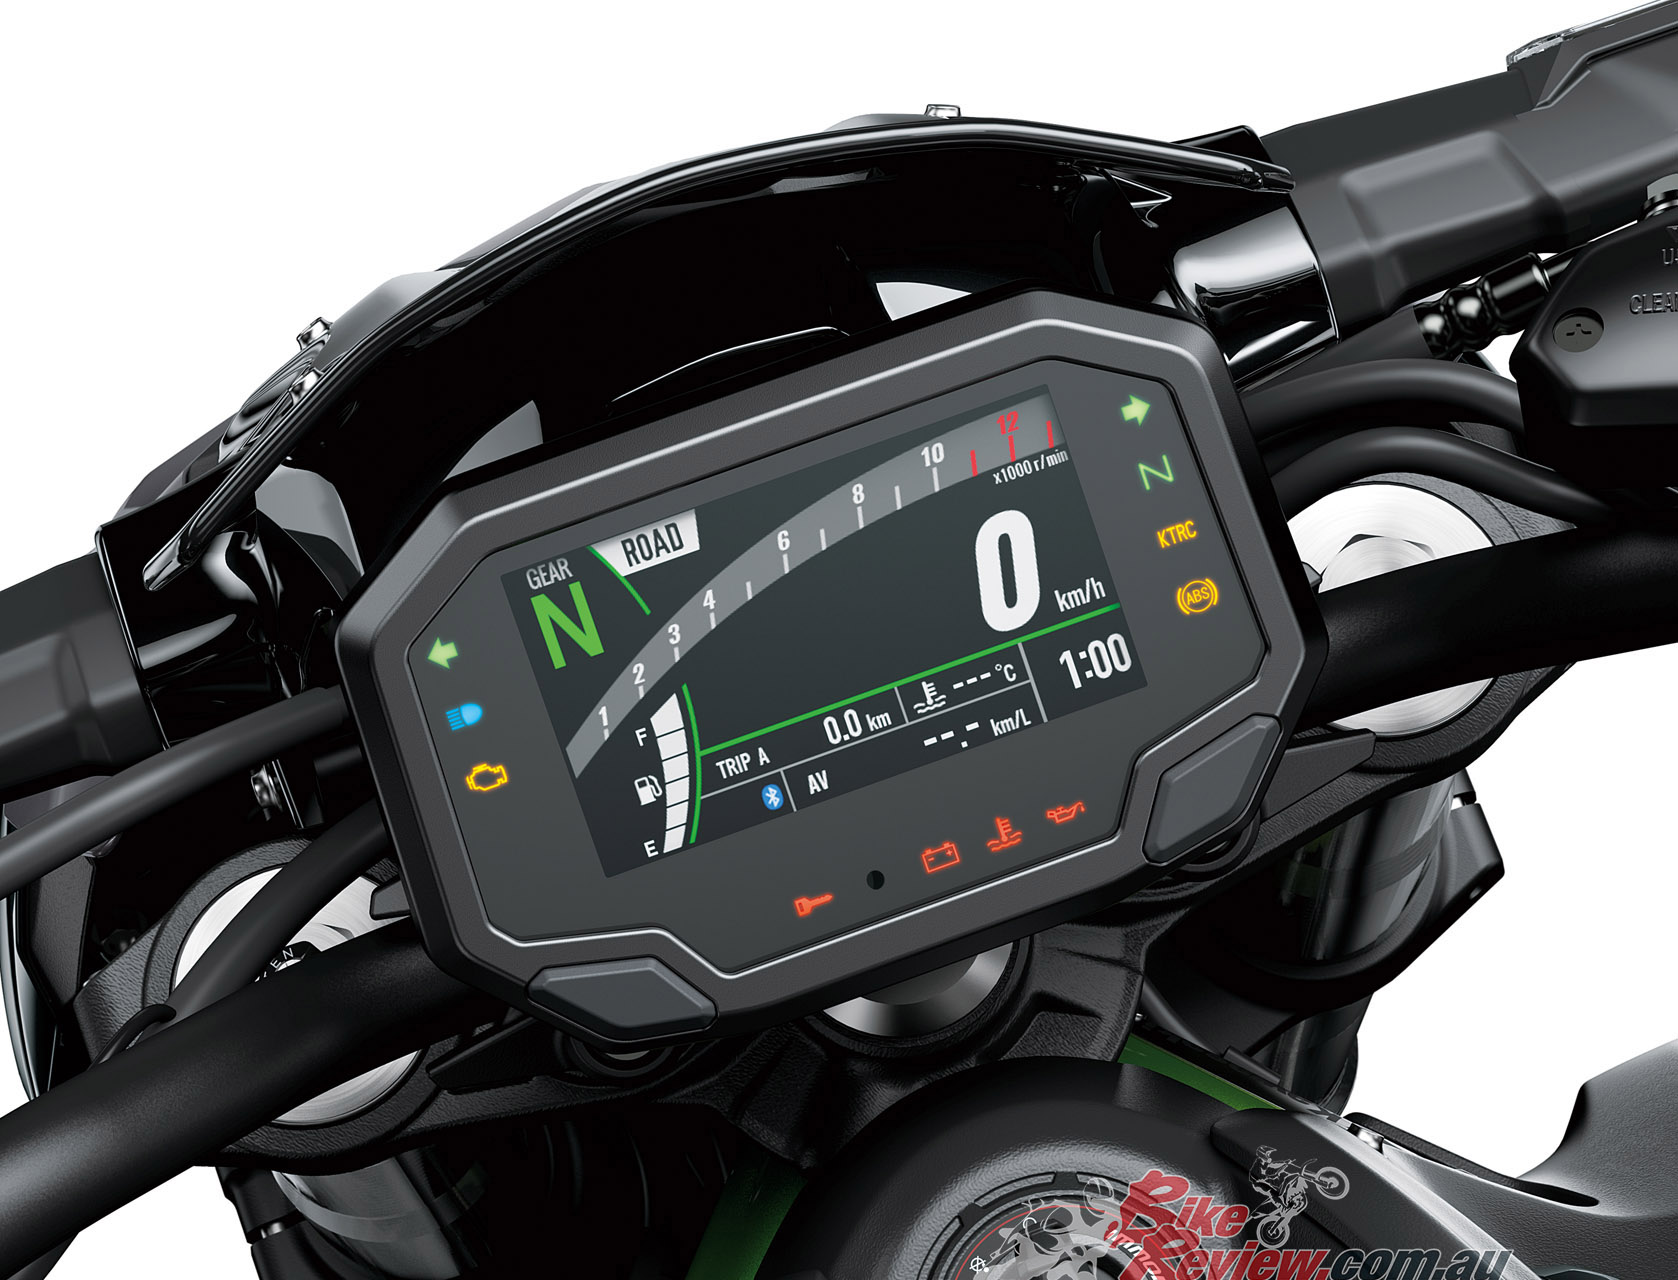 Review: 2020 Kawasaki Z900 Supernaked - Bike Review